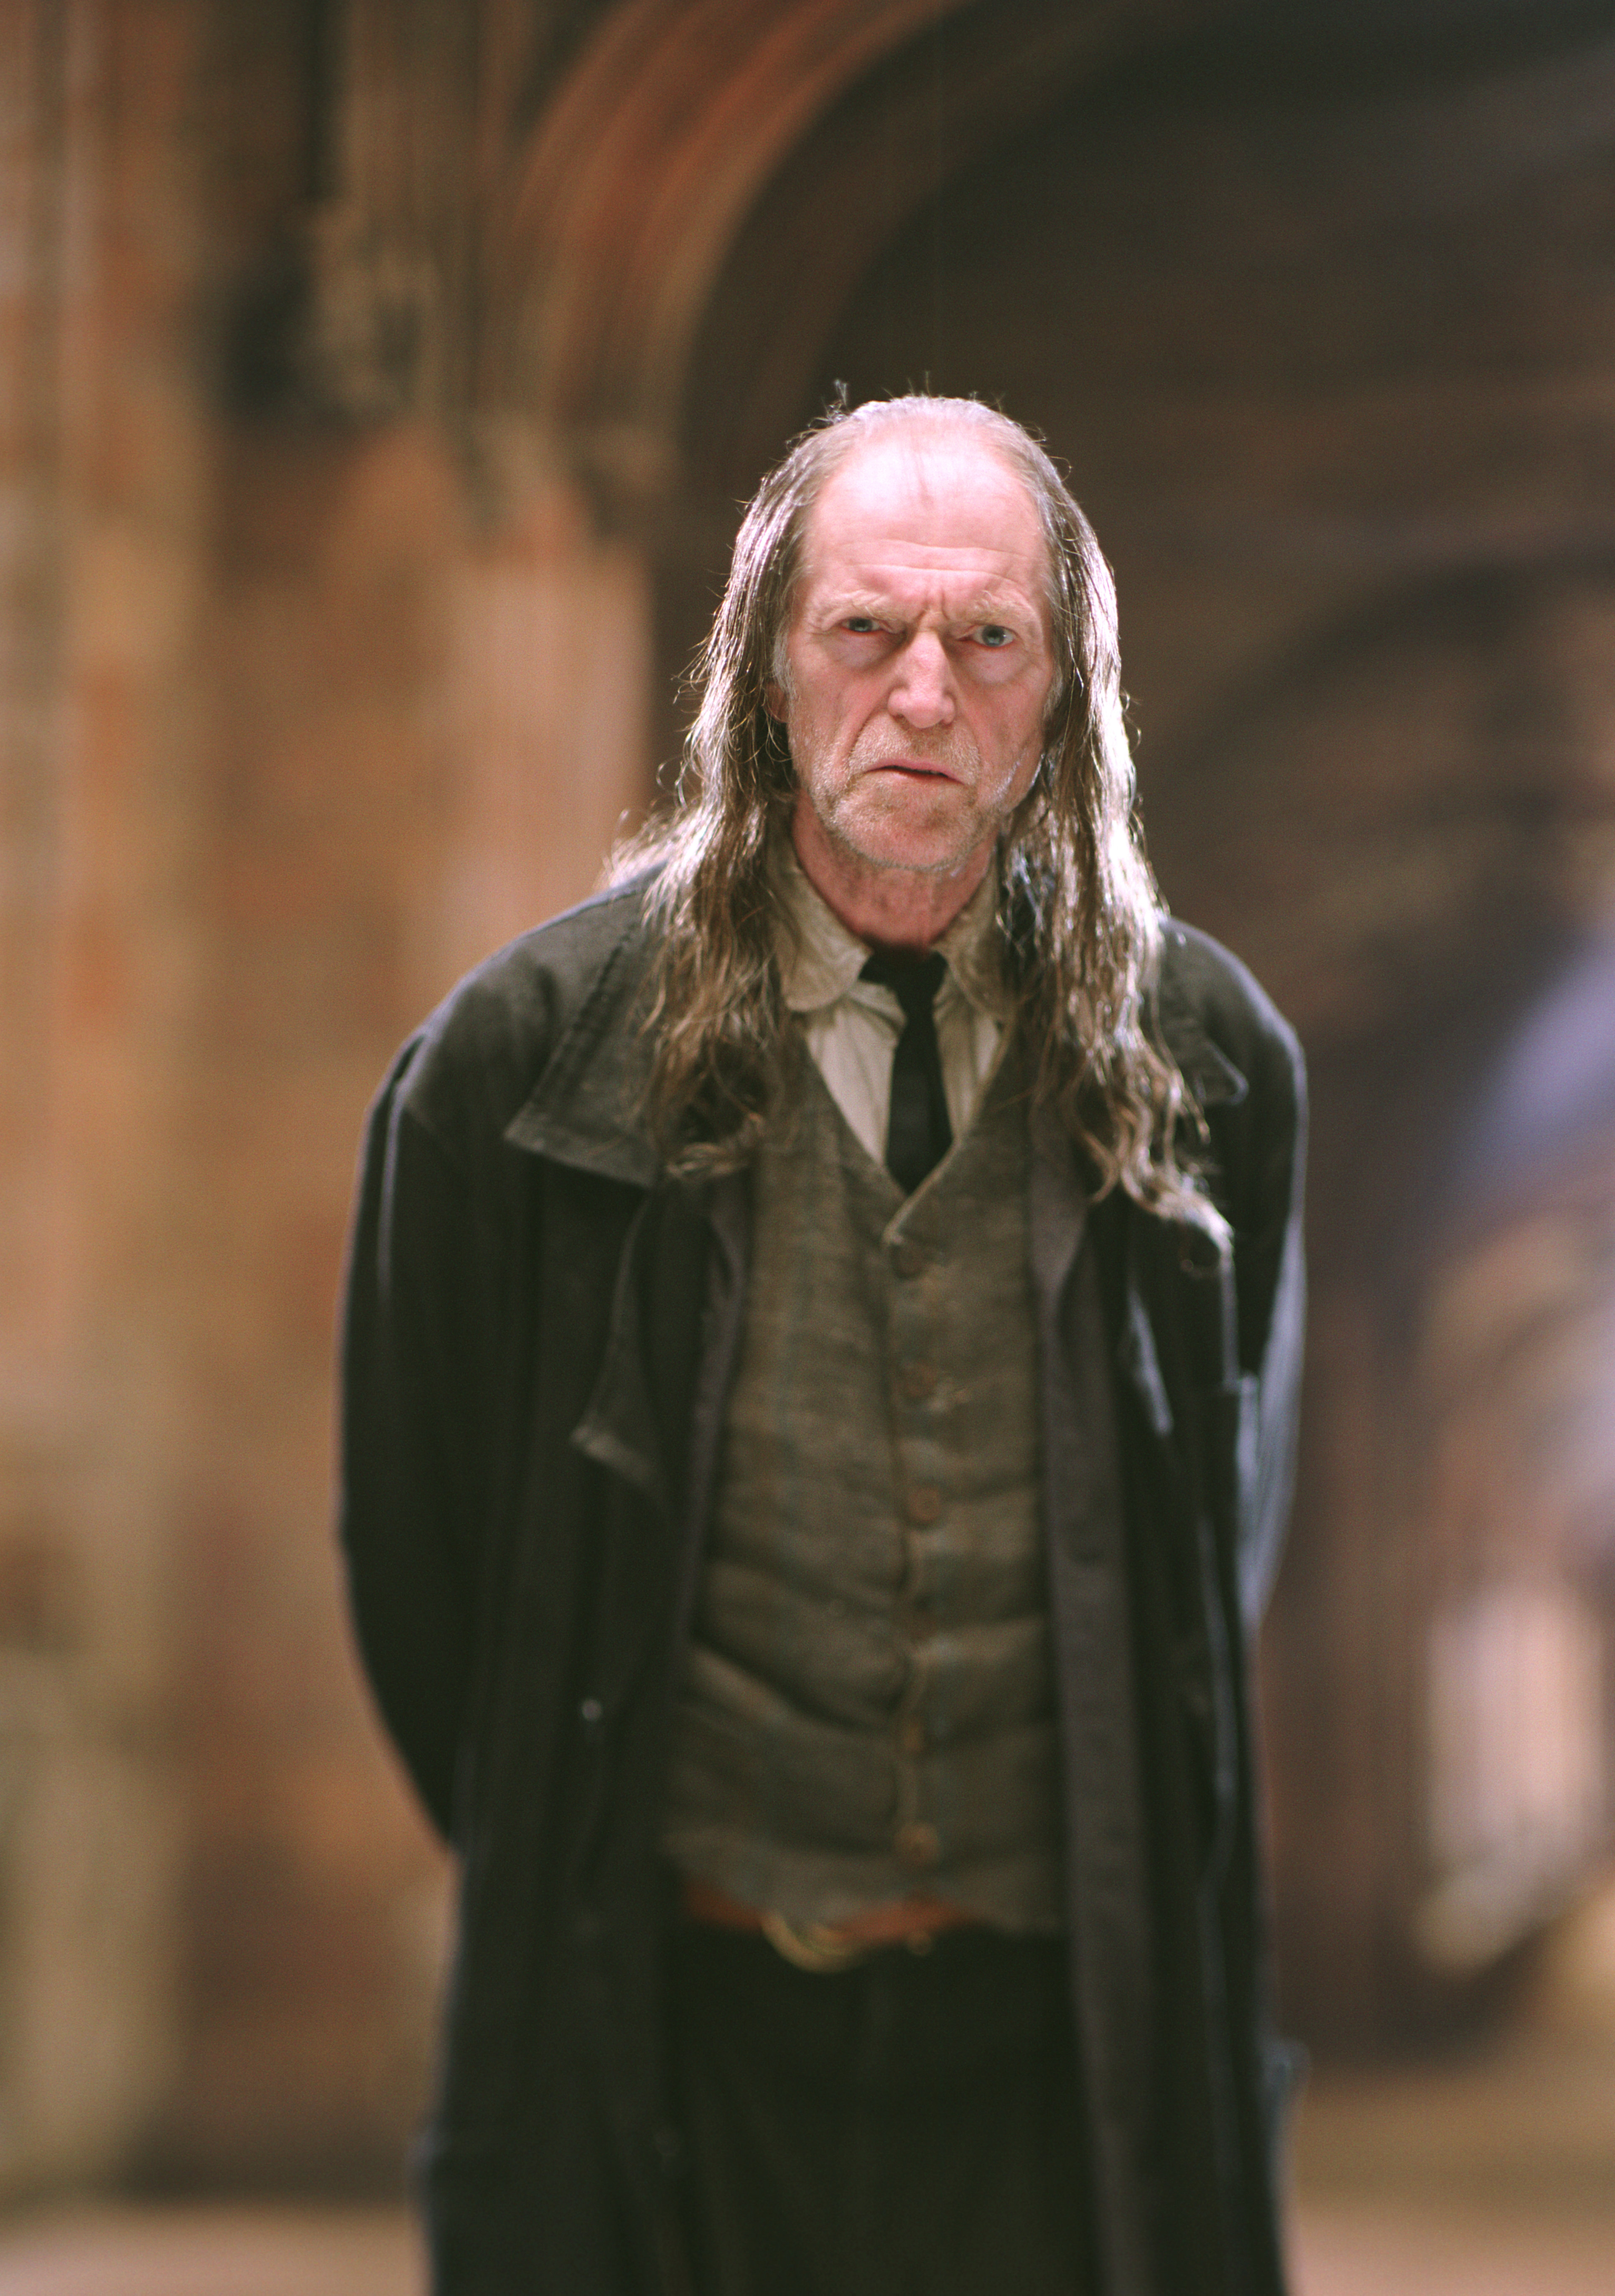 Argus Filch: The Cantankerous Caretaker of Hogwarts